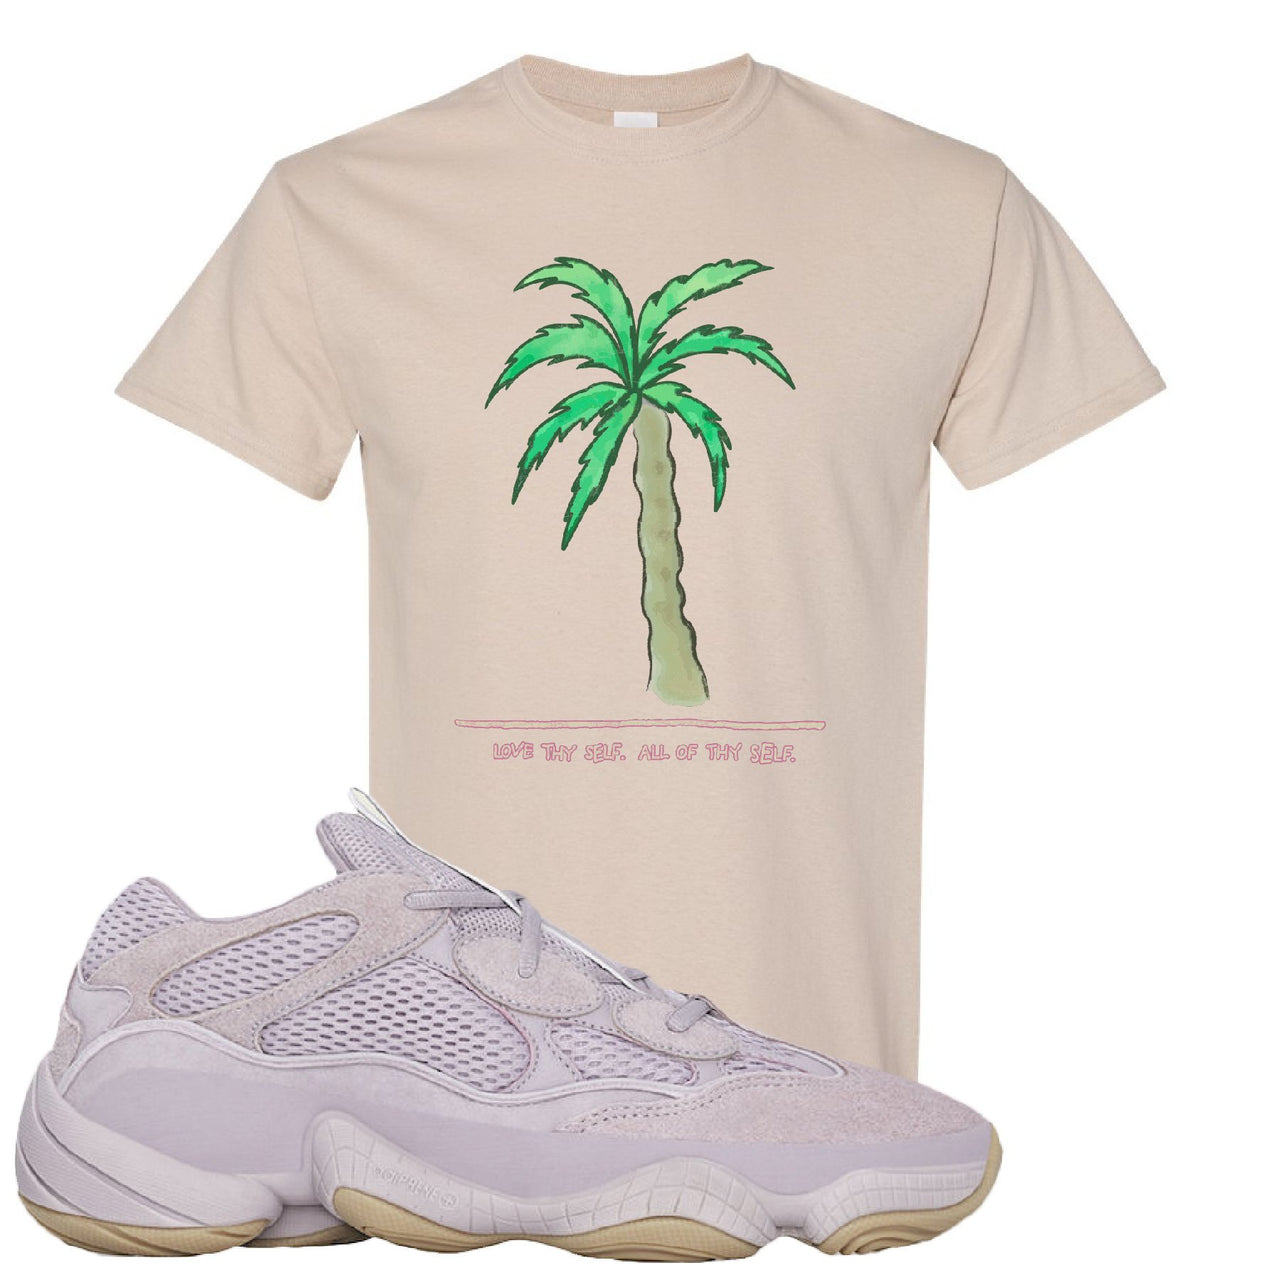 Yeezy 500 Soft Vision Love Thyself Palm Sand Sneaker Hook Up T-Shirt